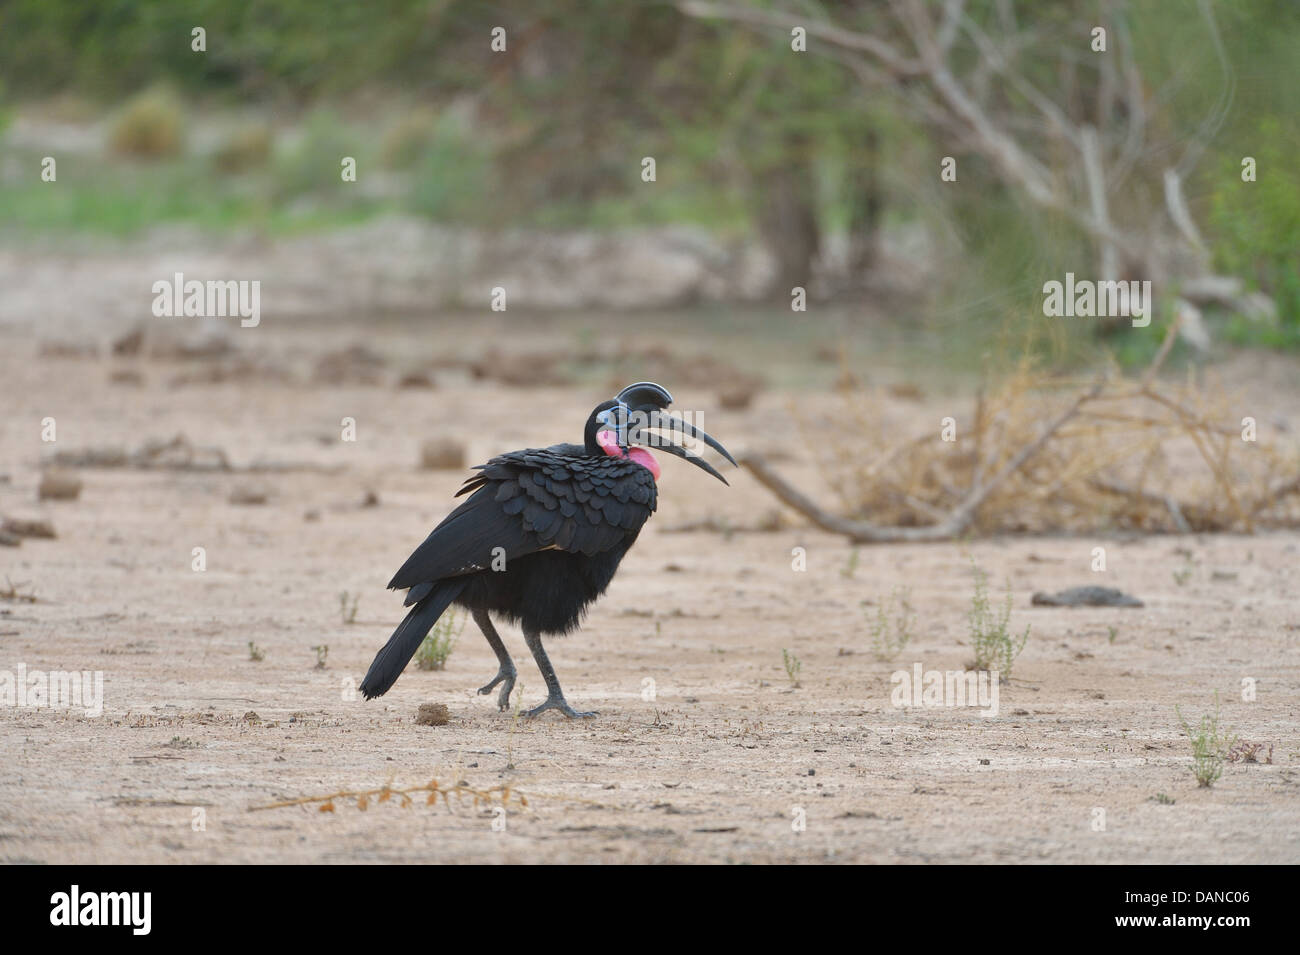 Ground-Hornbill abisinio - Norte (Bucorvus abyssinicus Ground-Hornbill) buscando comida en el suelo Foto de stock